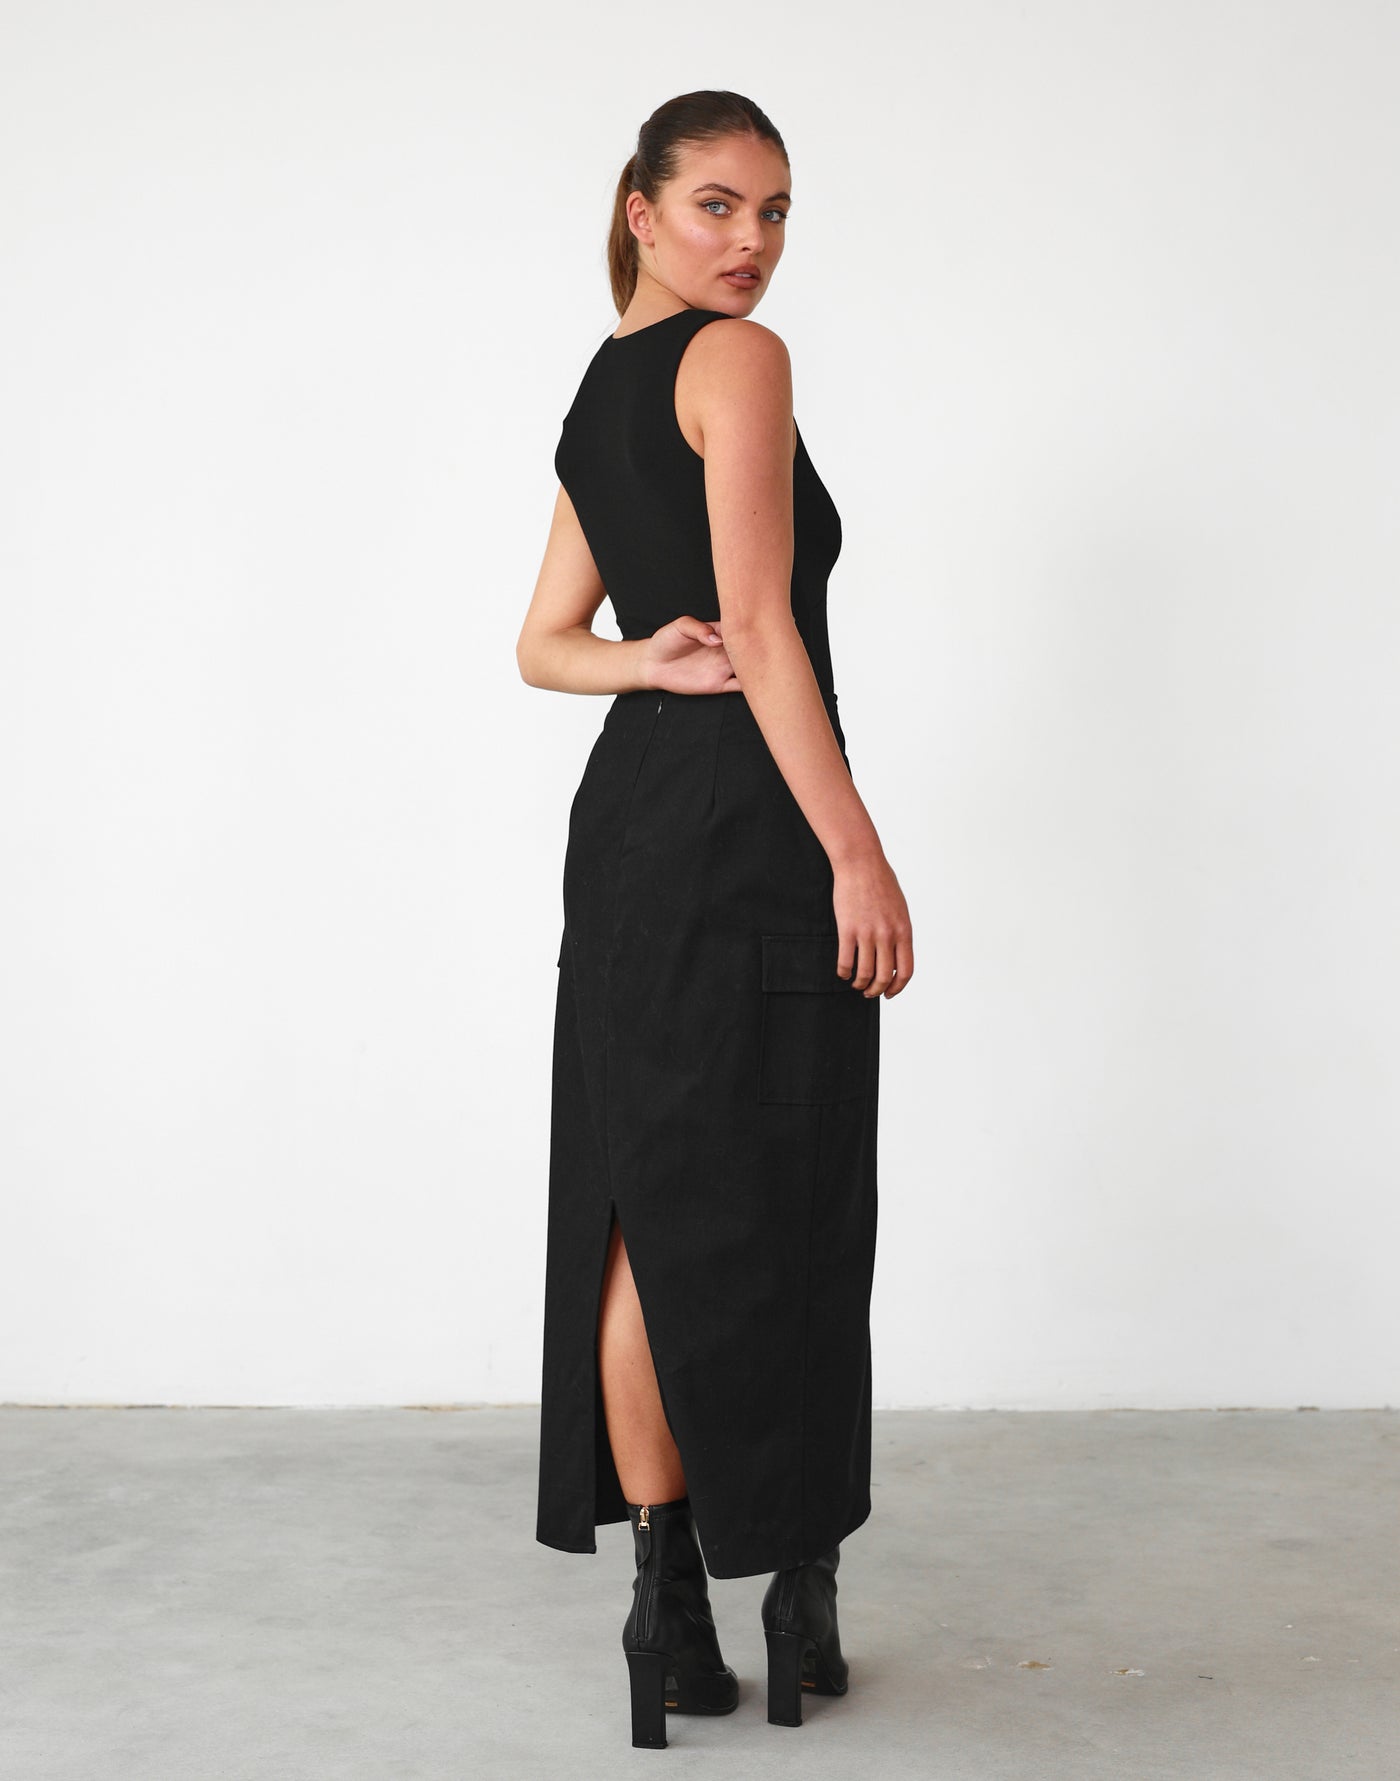 Kimmy Bodysuit (Black) - Cut Out Sleeveless Bodysuit - Women's Top - Charcoal Clothing